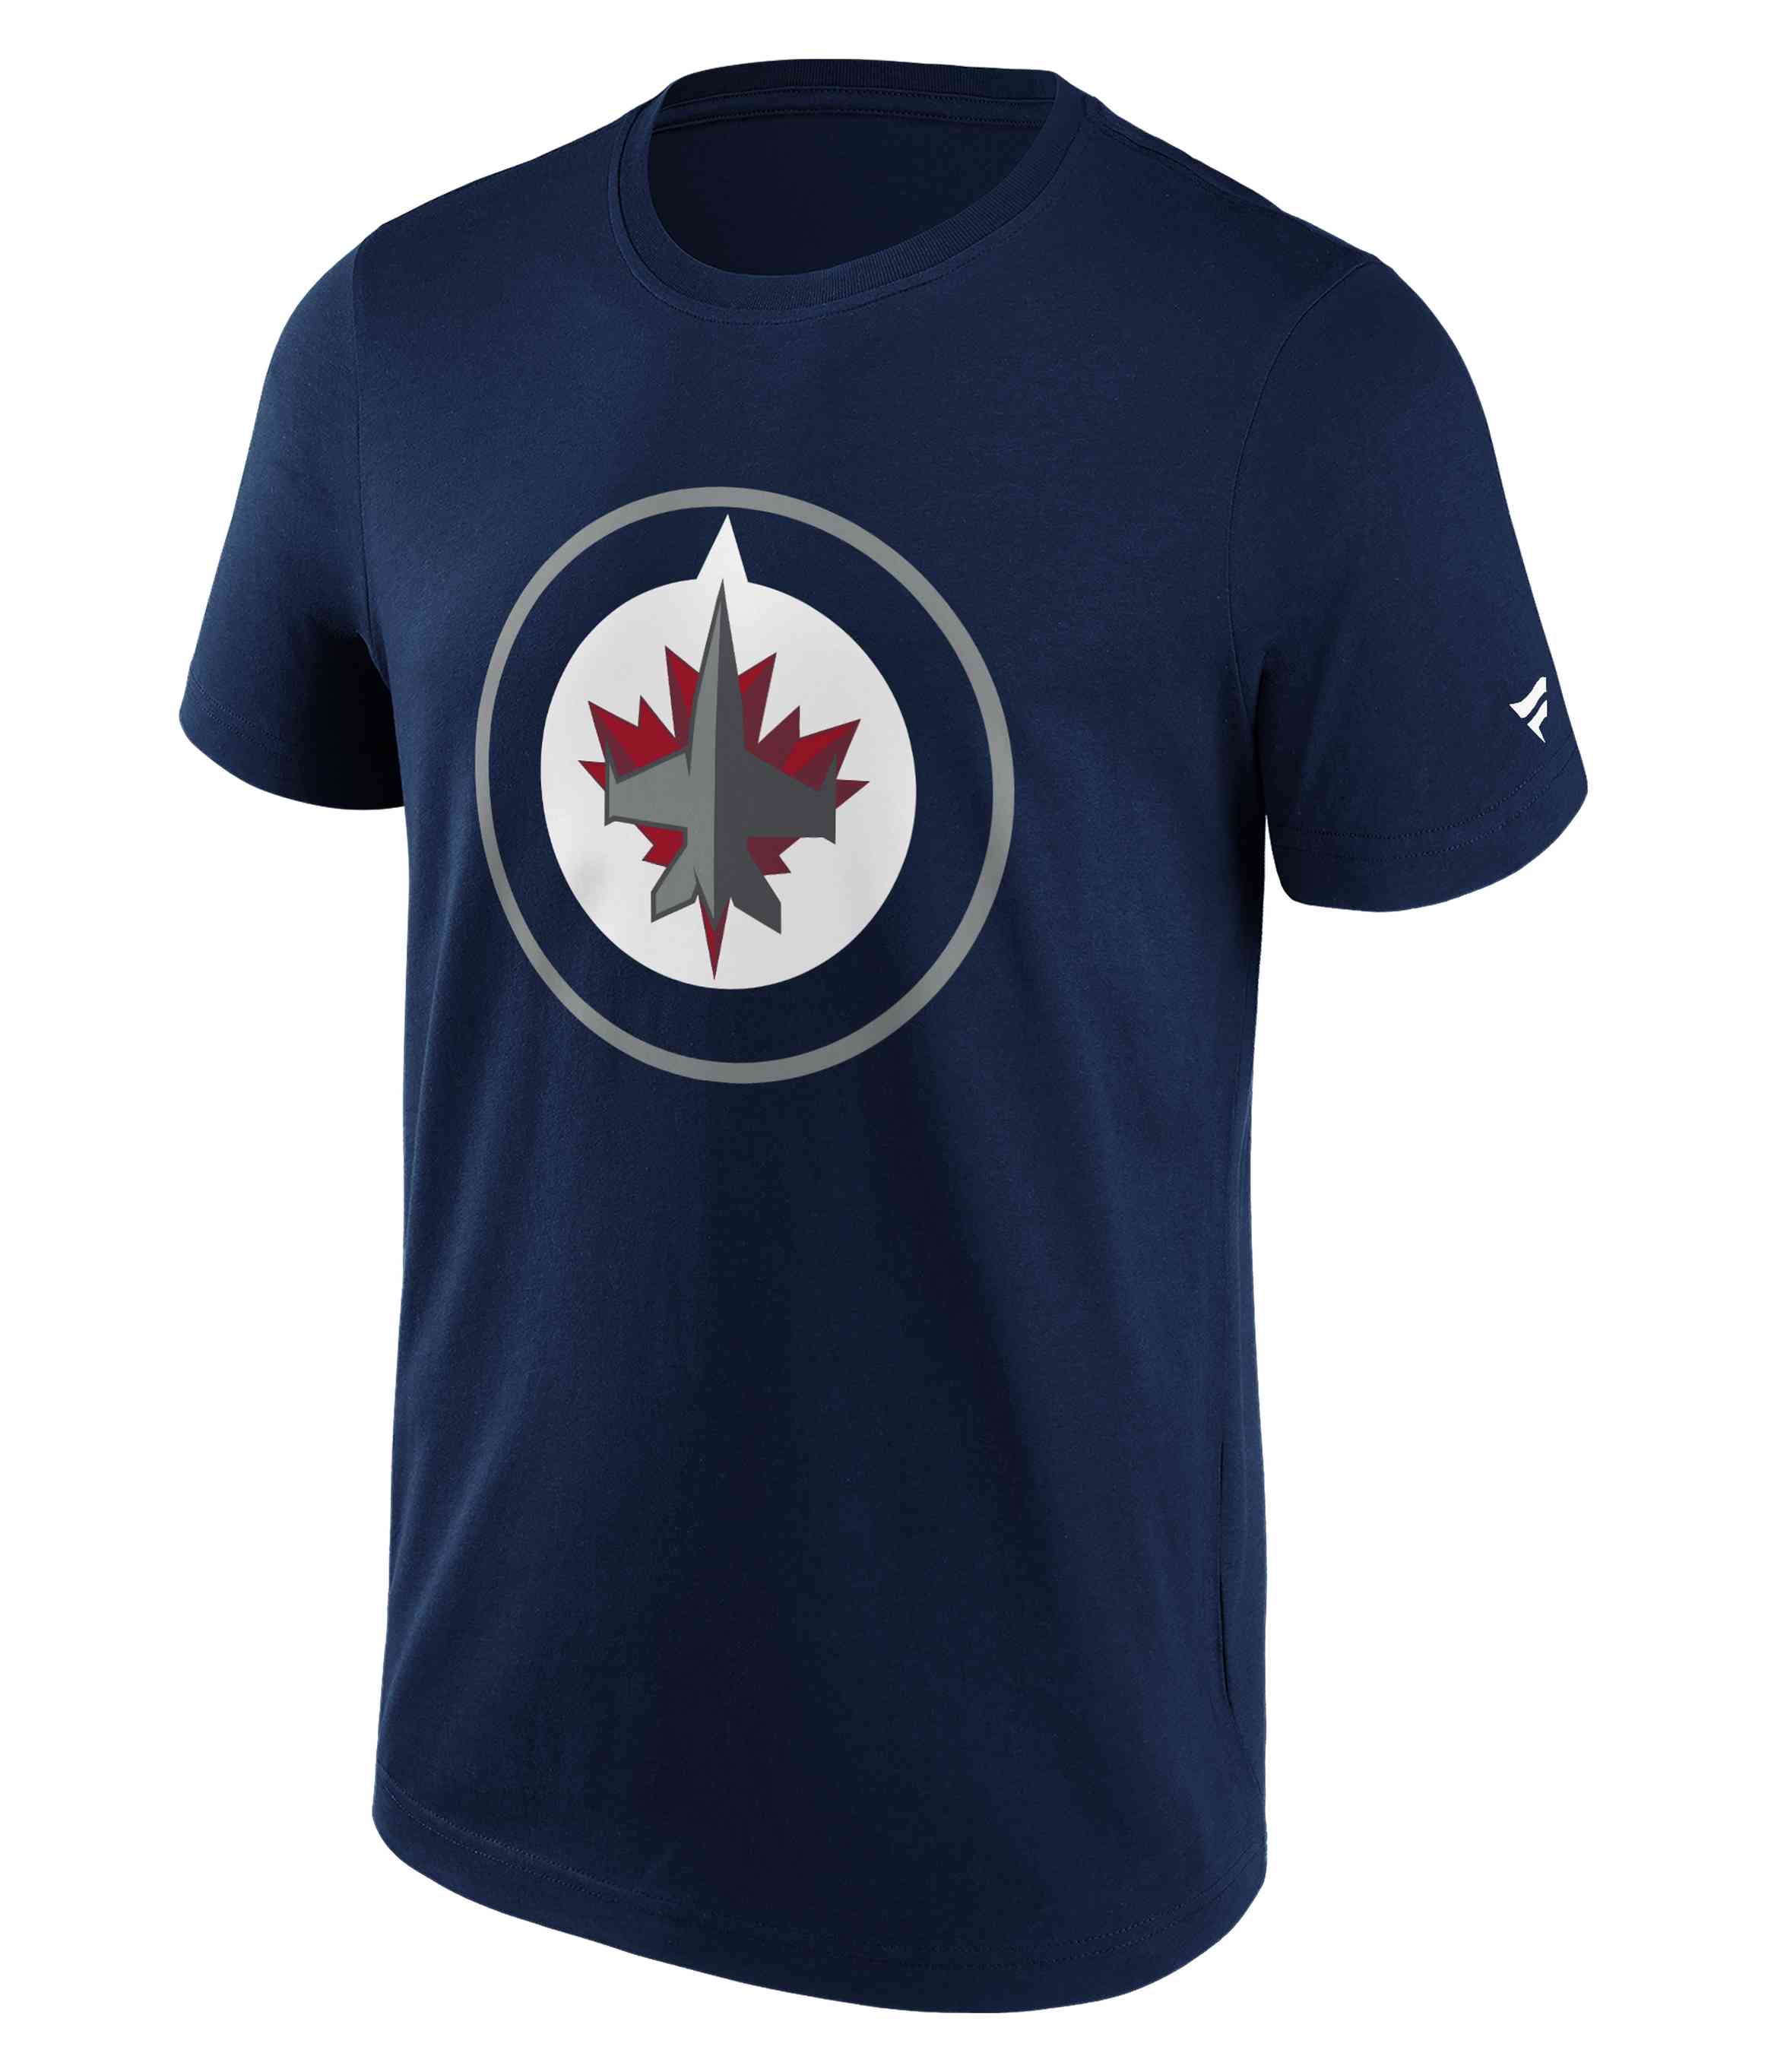 Fanatics - NHL Winnipeg Jets Primary Logo Graphic T-Shirt